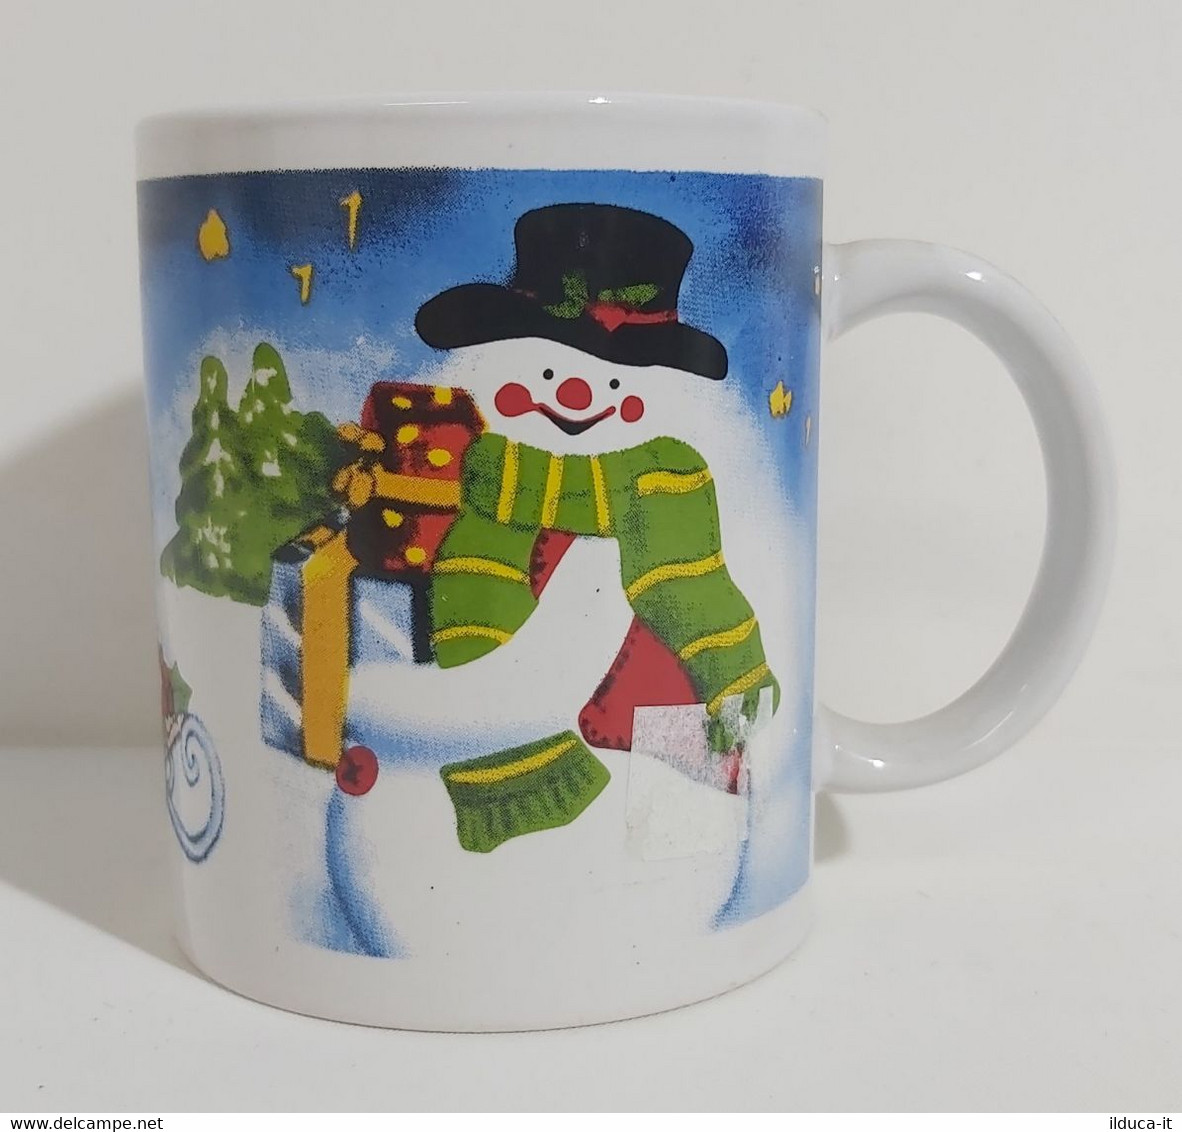 02434 Tazza (Mug) In Ceramica - Natalizia - Pupazzo Di Neve - Tasses